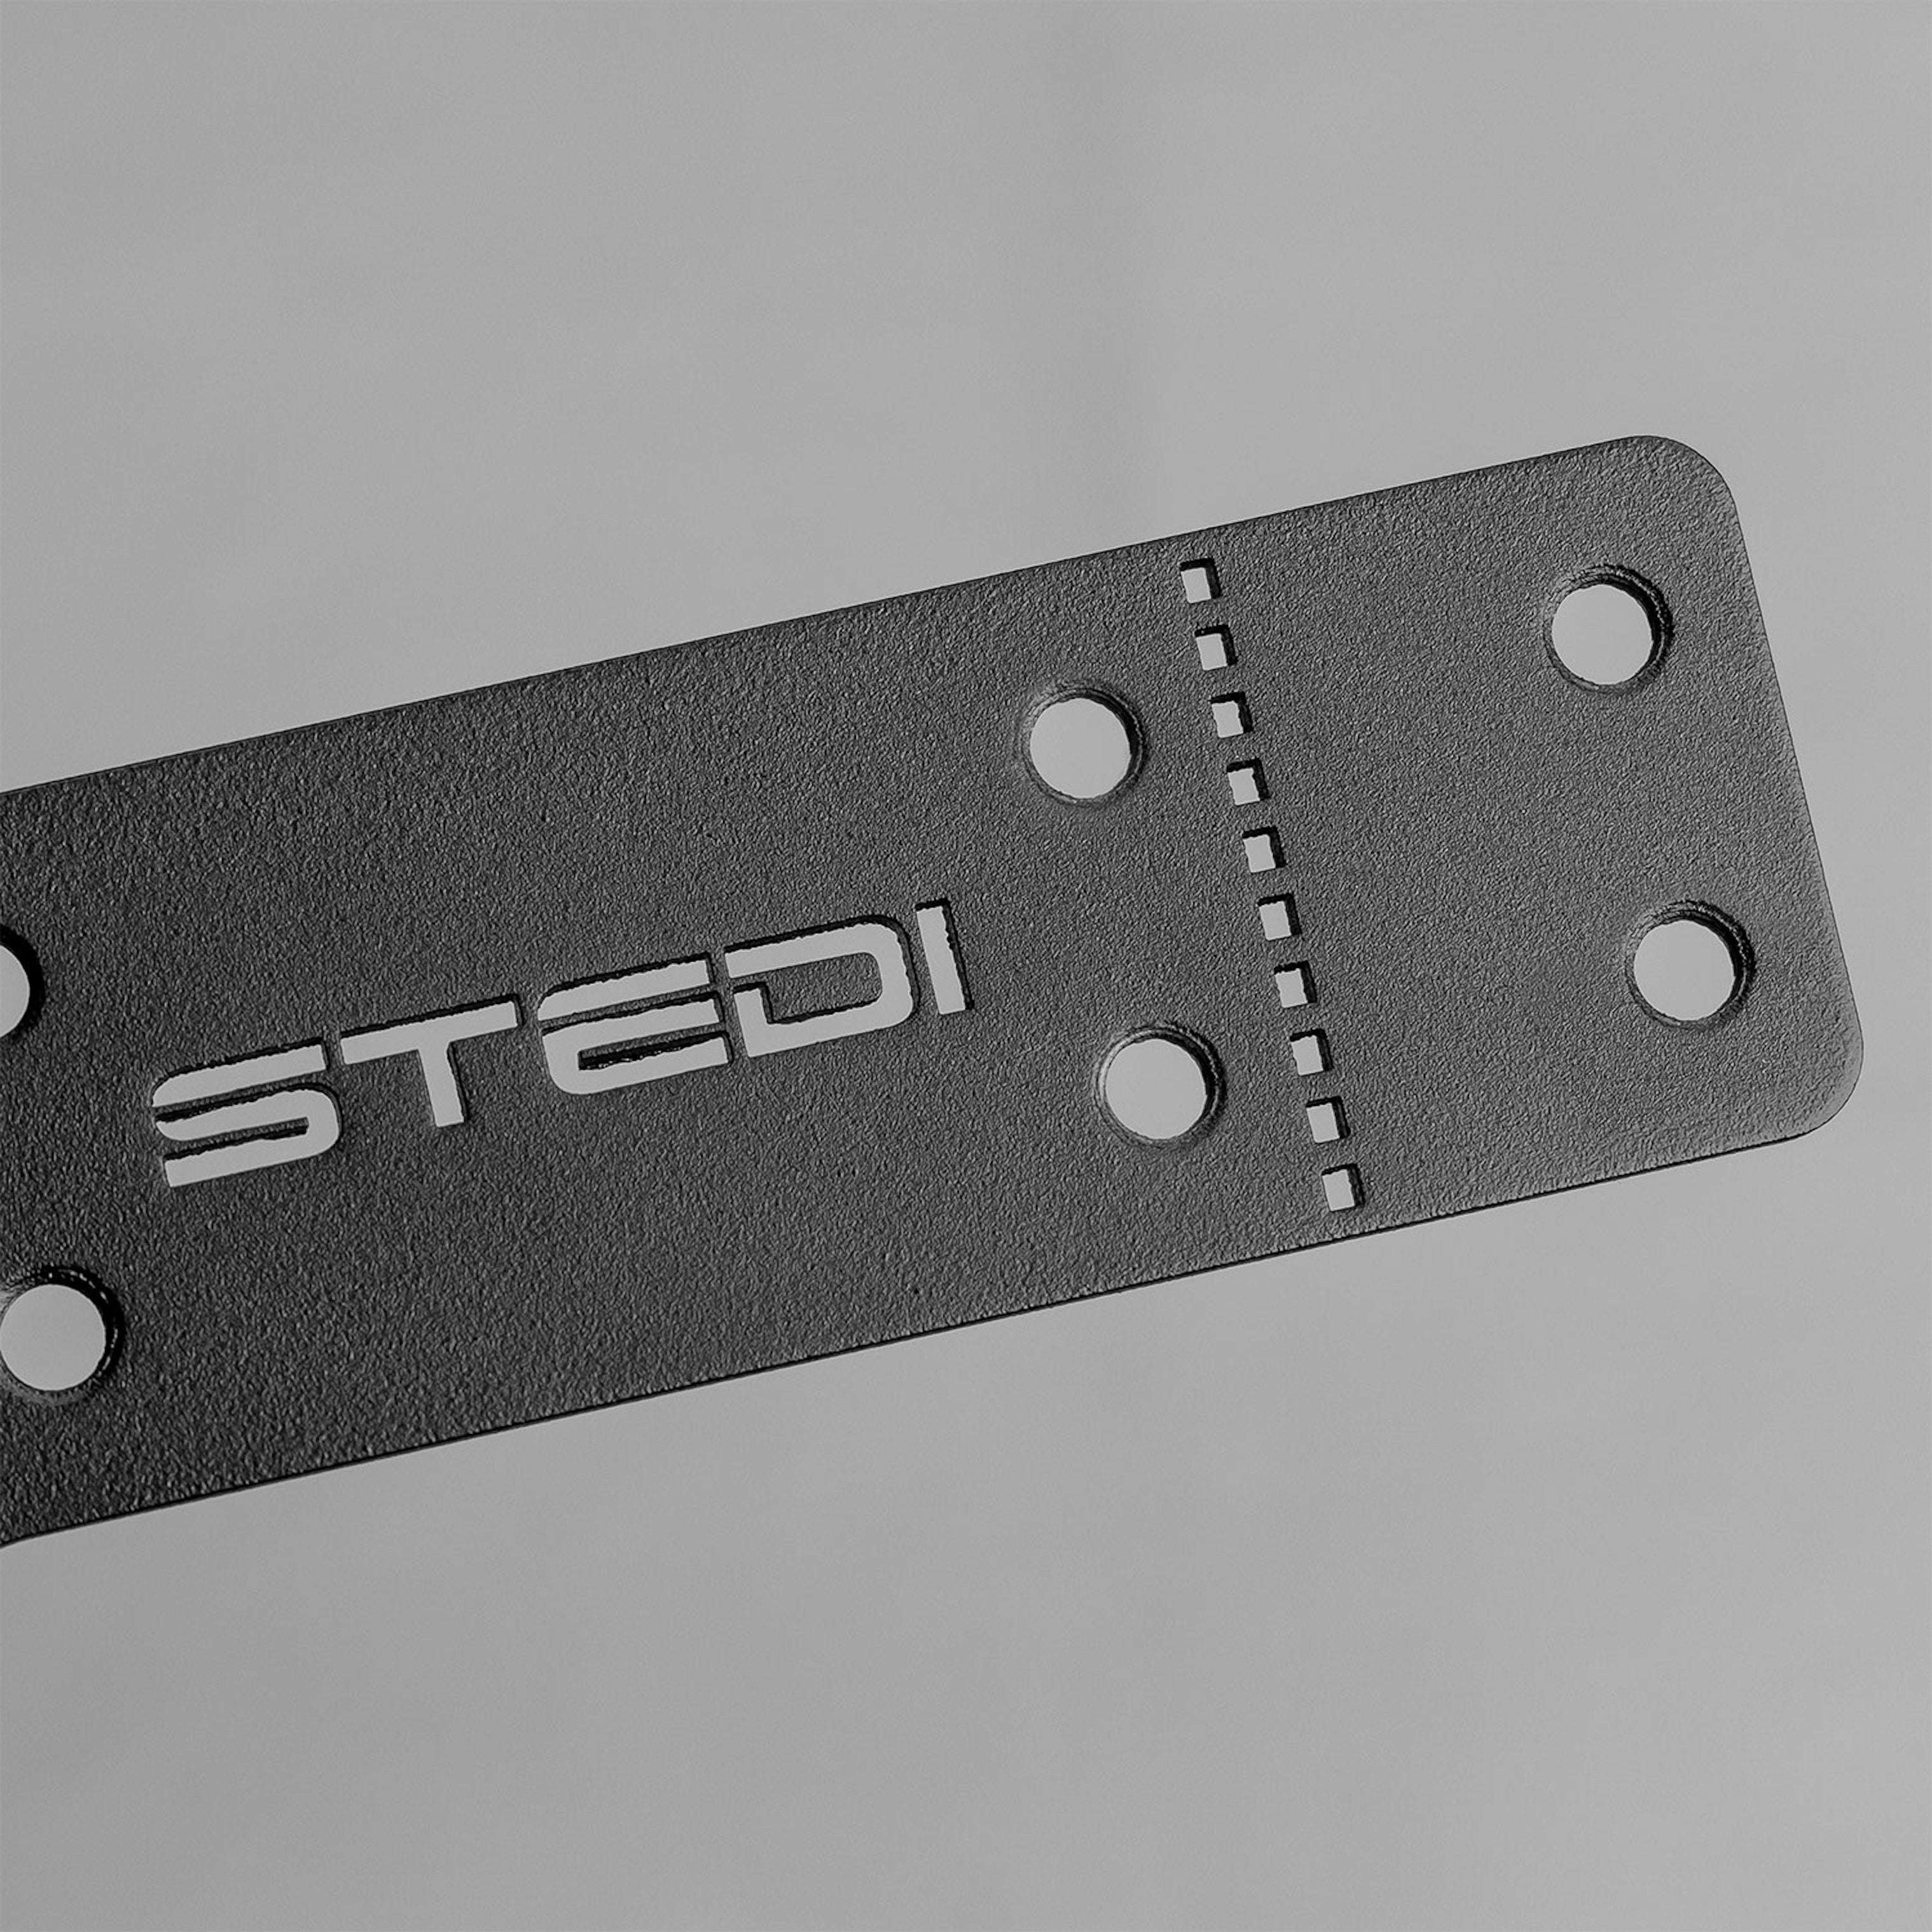 STEDI Kennzeichenhalter für Micro V2 LED Light Bar 13,9 Zoll